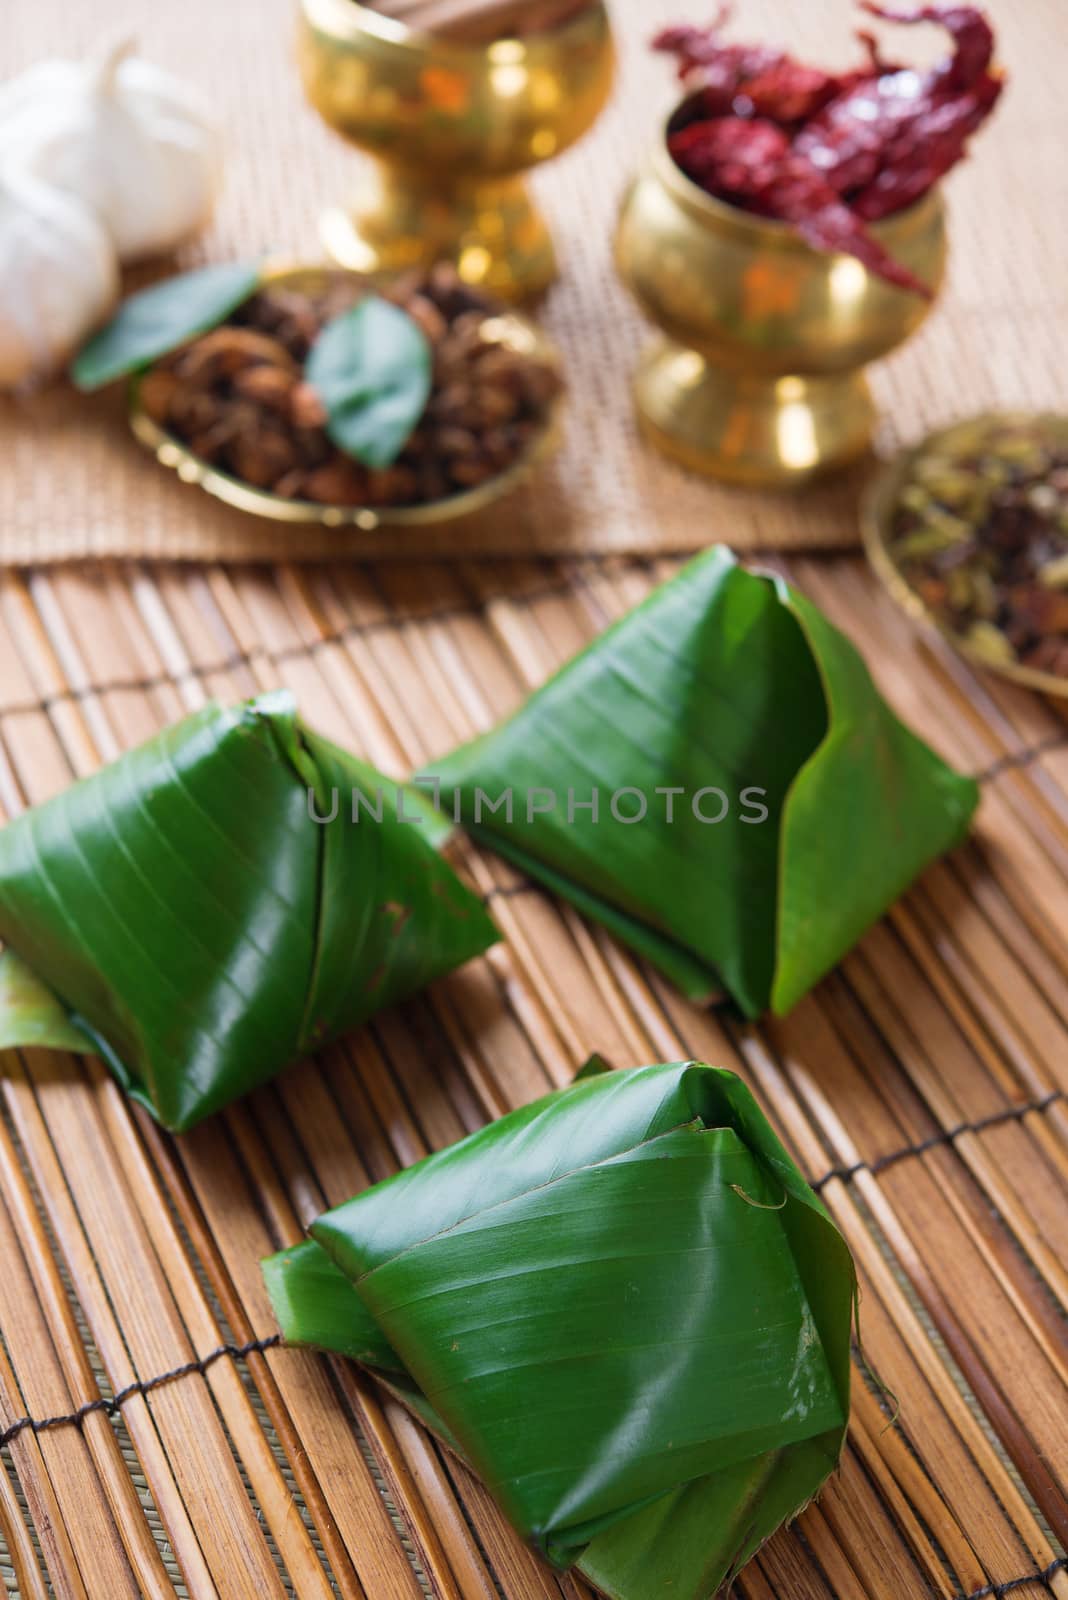 Nasi lemak, popular traditional Malaysian food wrapped with banana leaf.